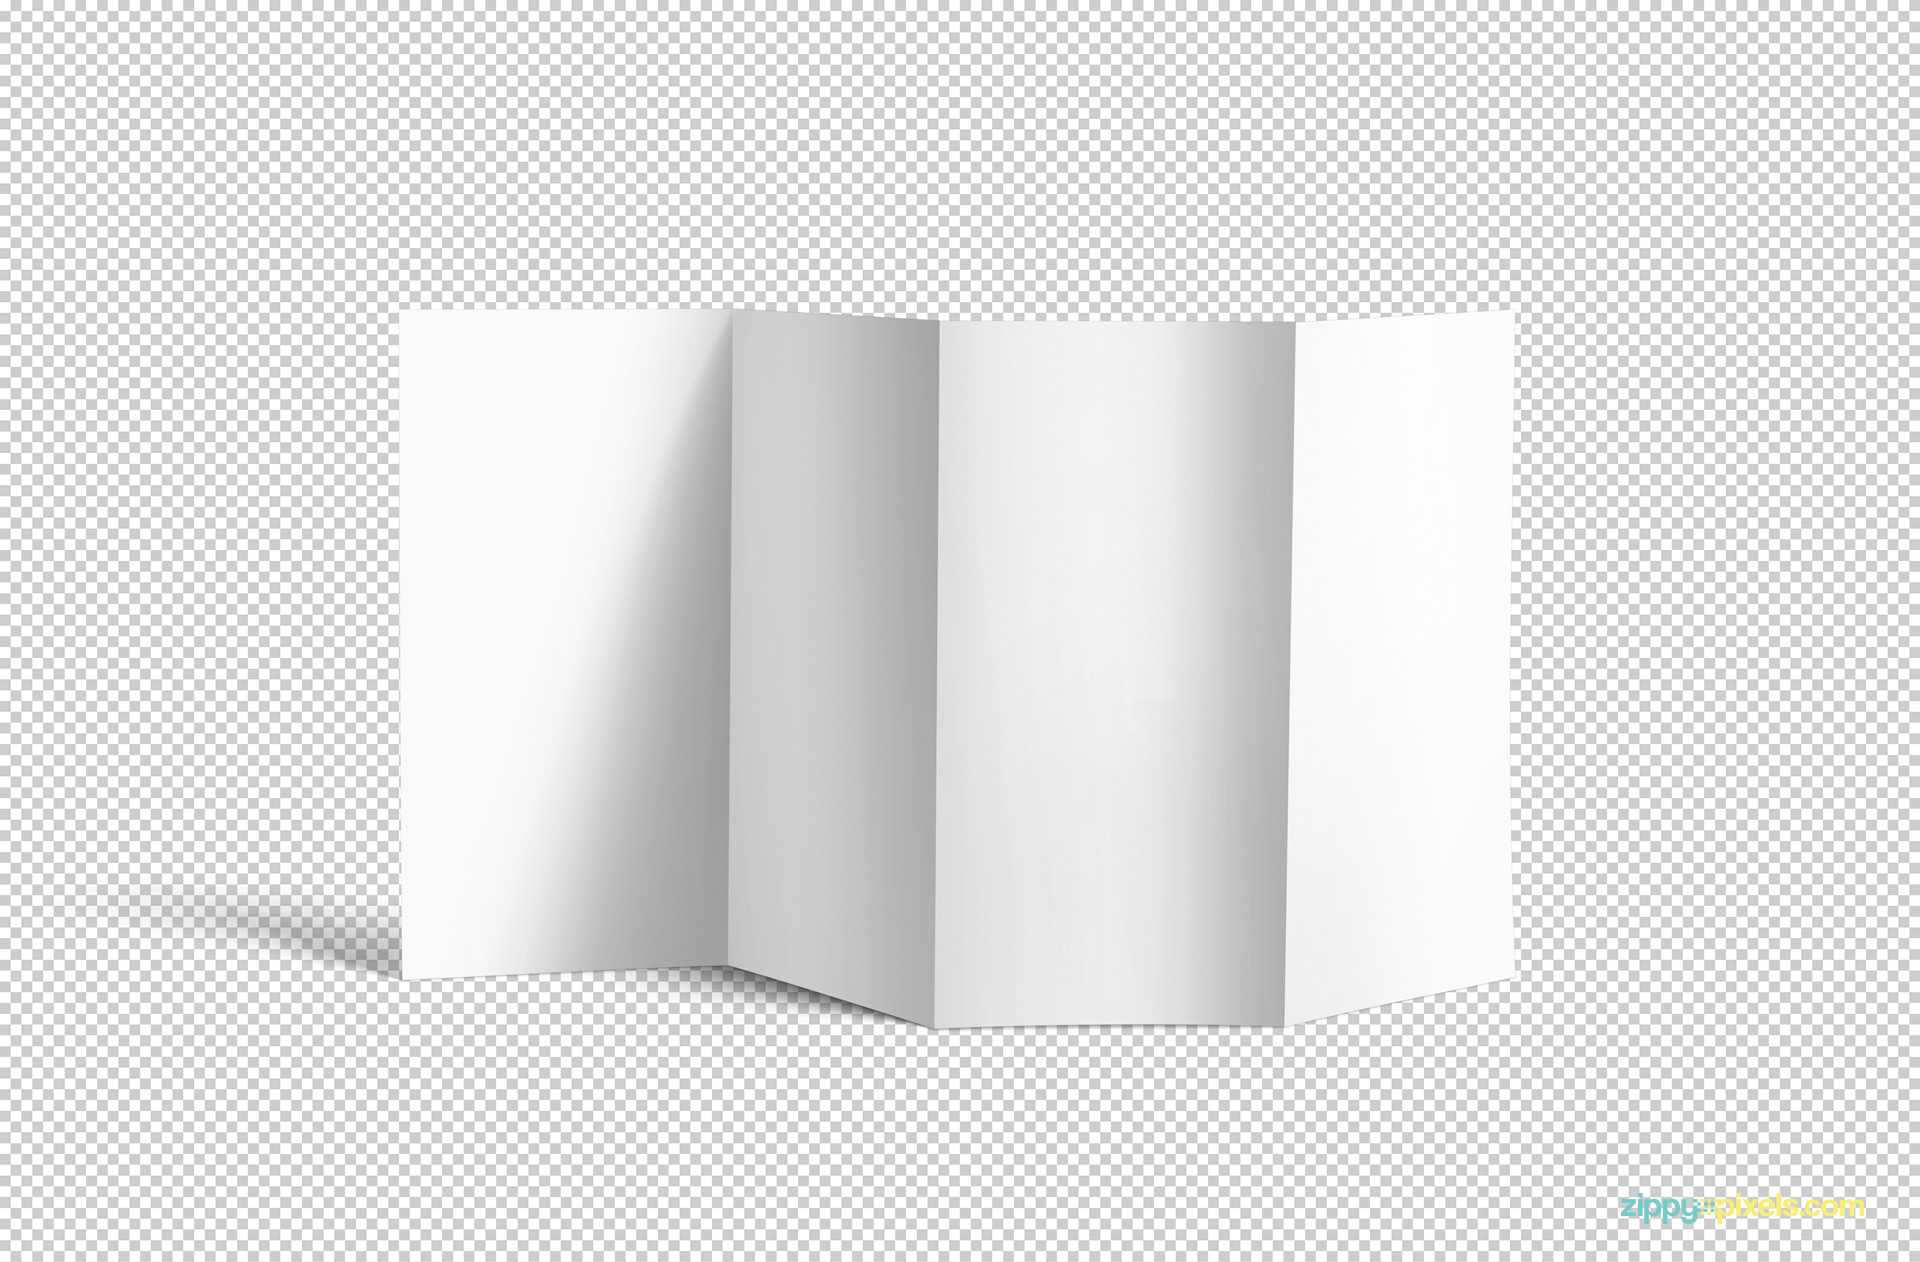 Free 4 Fold Brochure Mockup | Zippypixels With 4 Fold Brochure Template Word